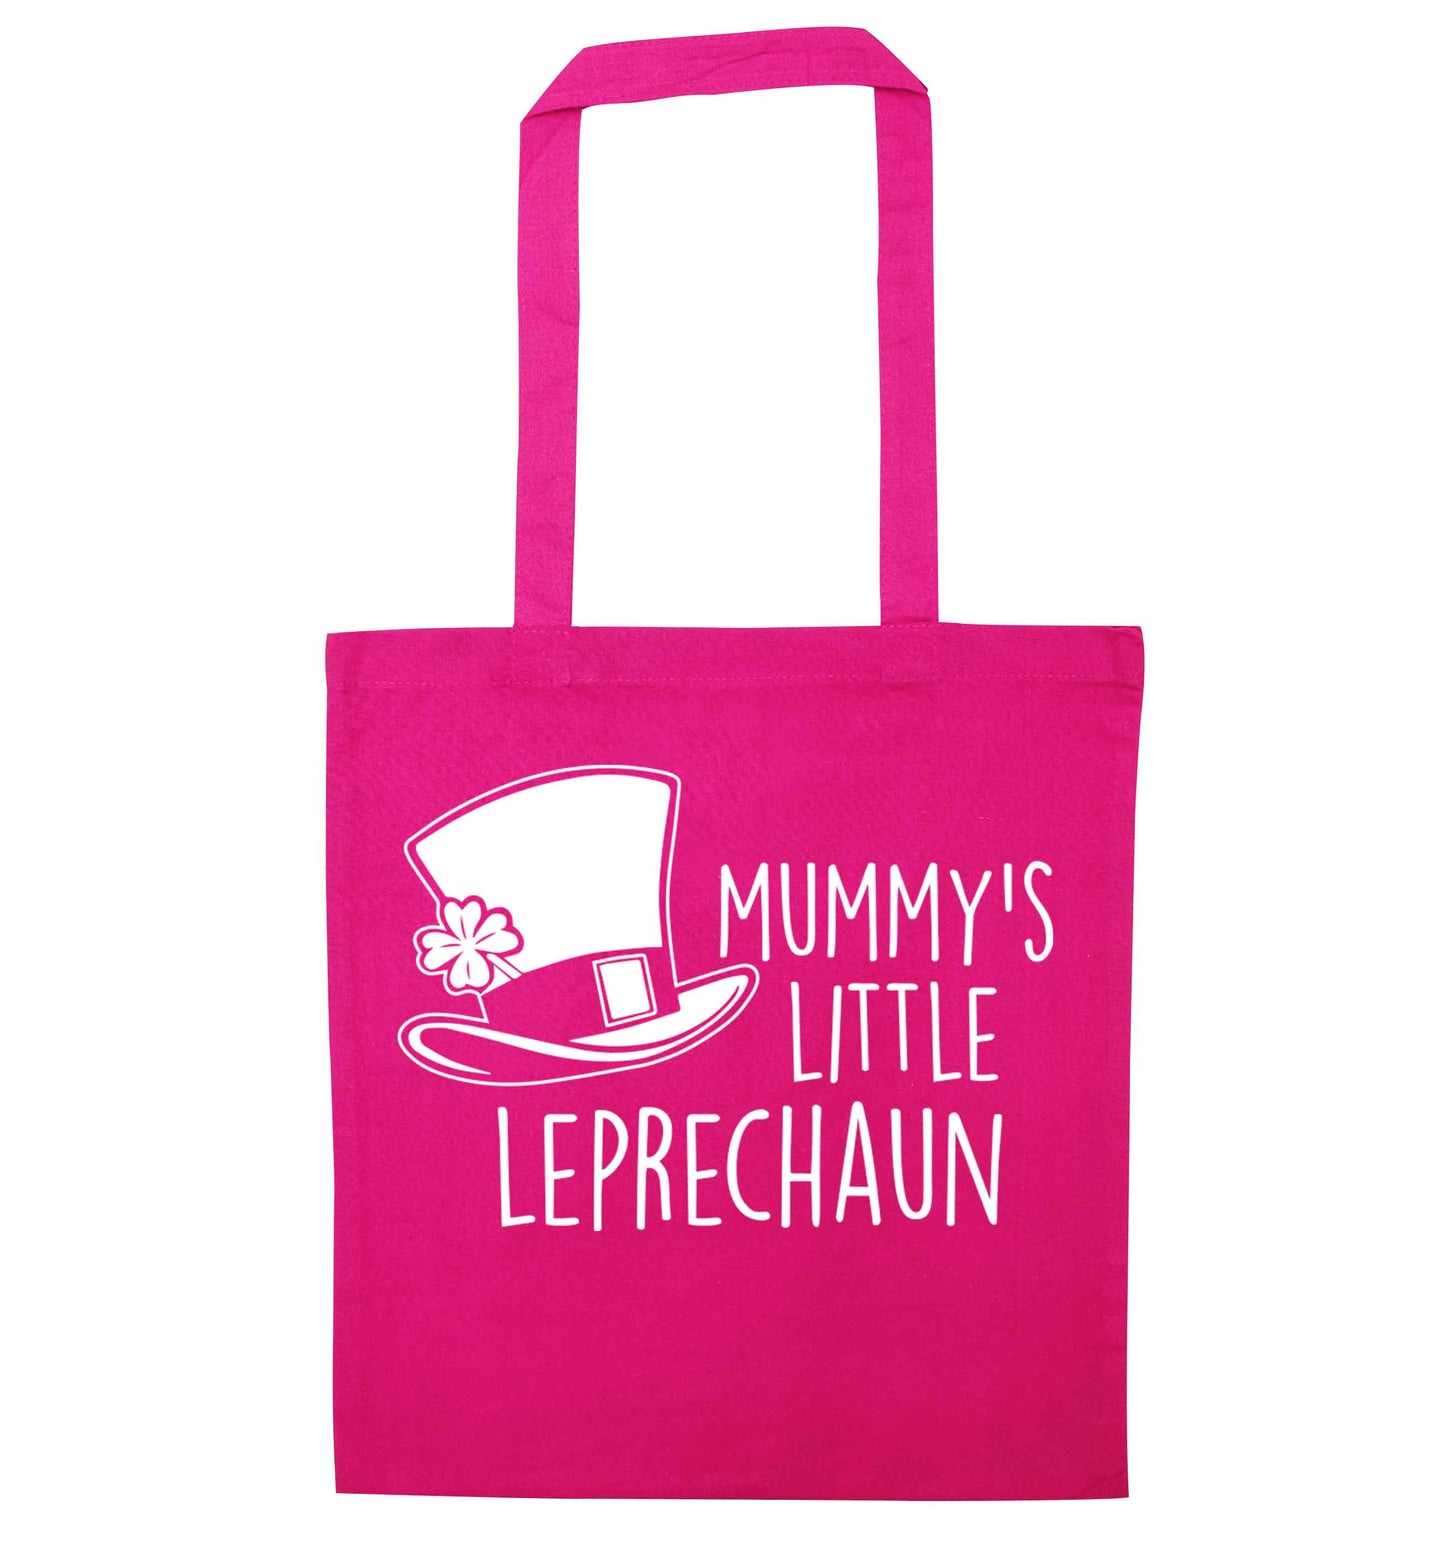 Mummy's little leprechaun pink tote bag